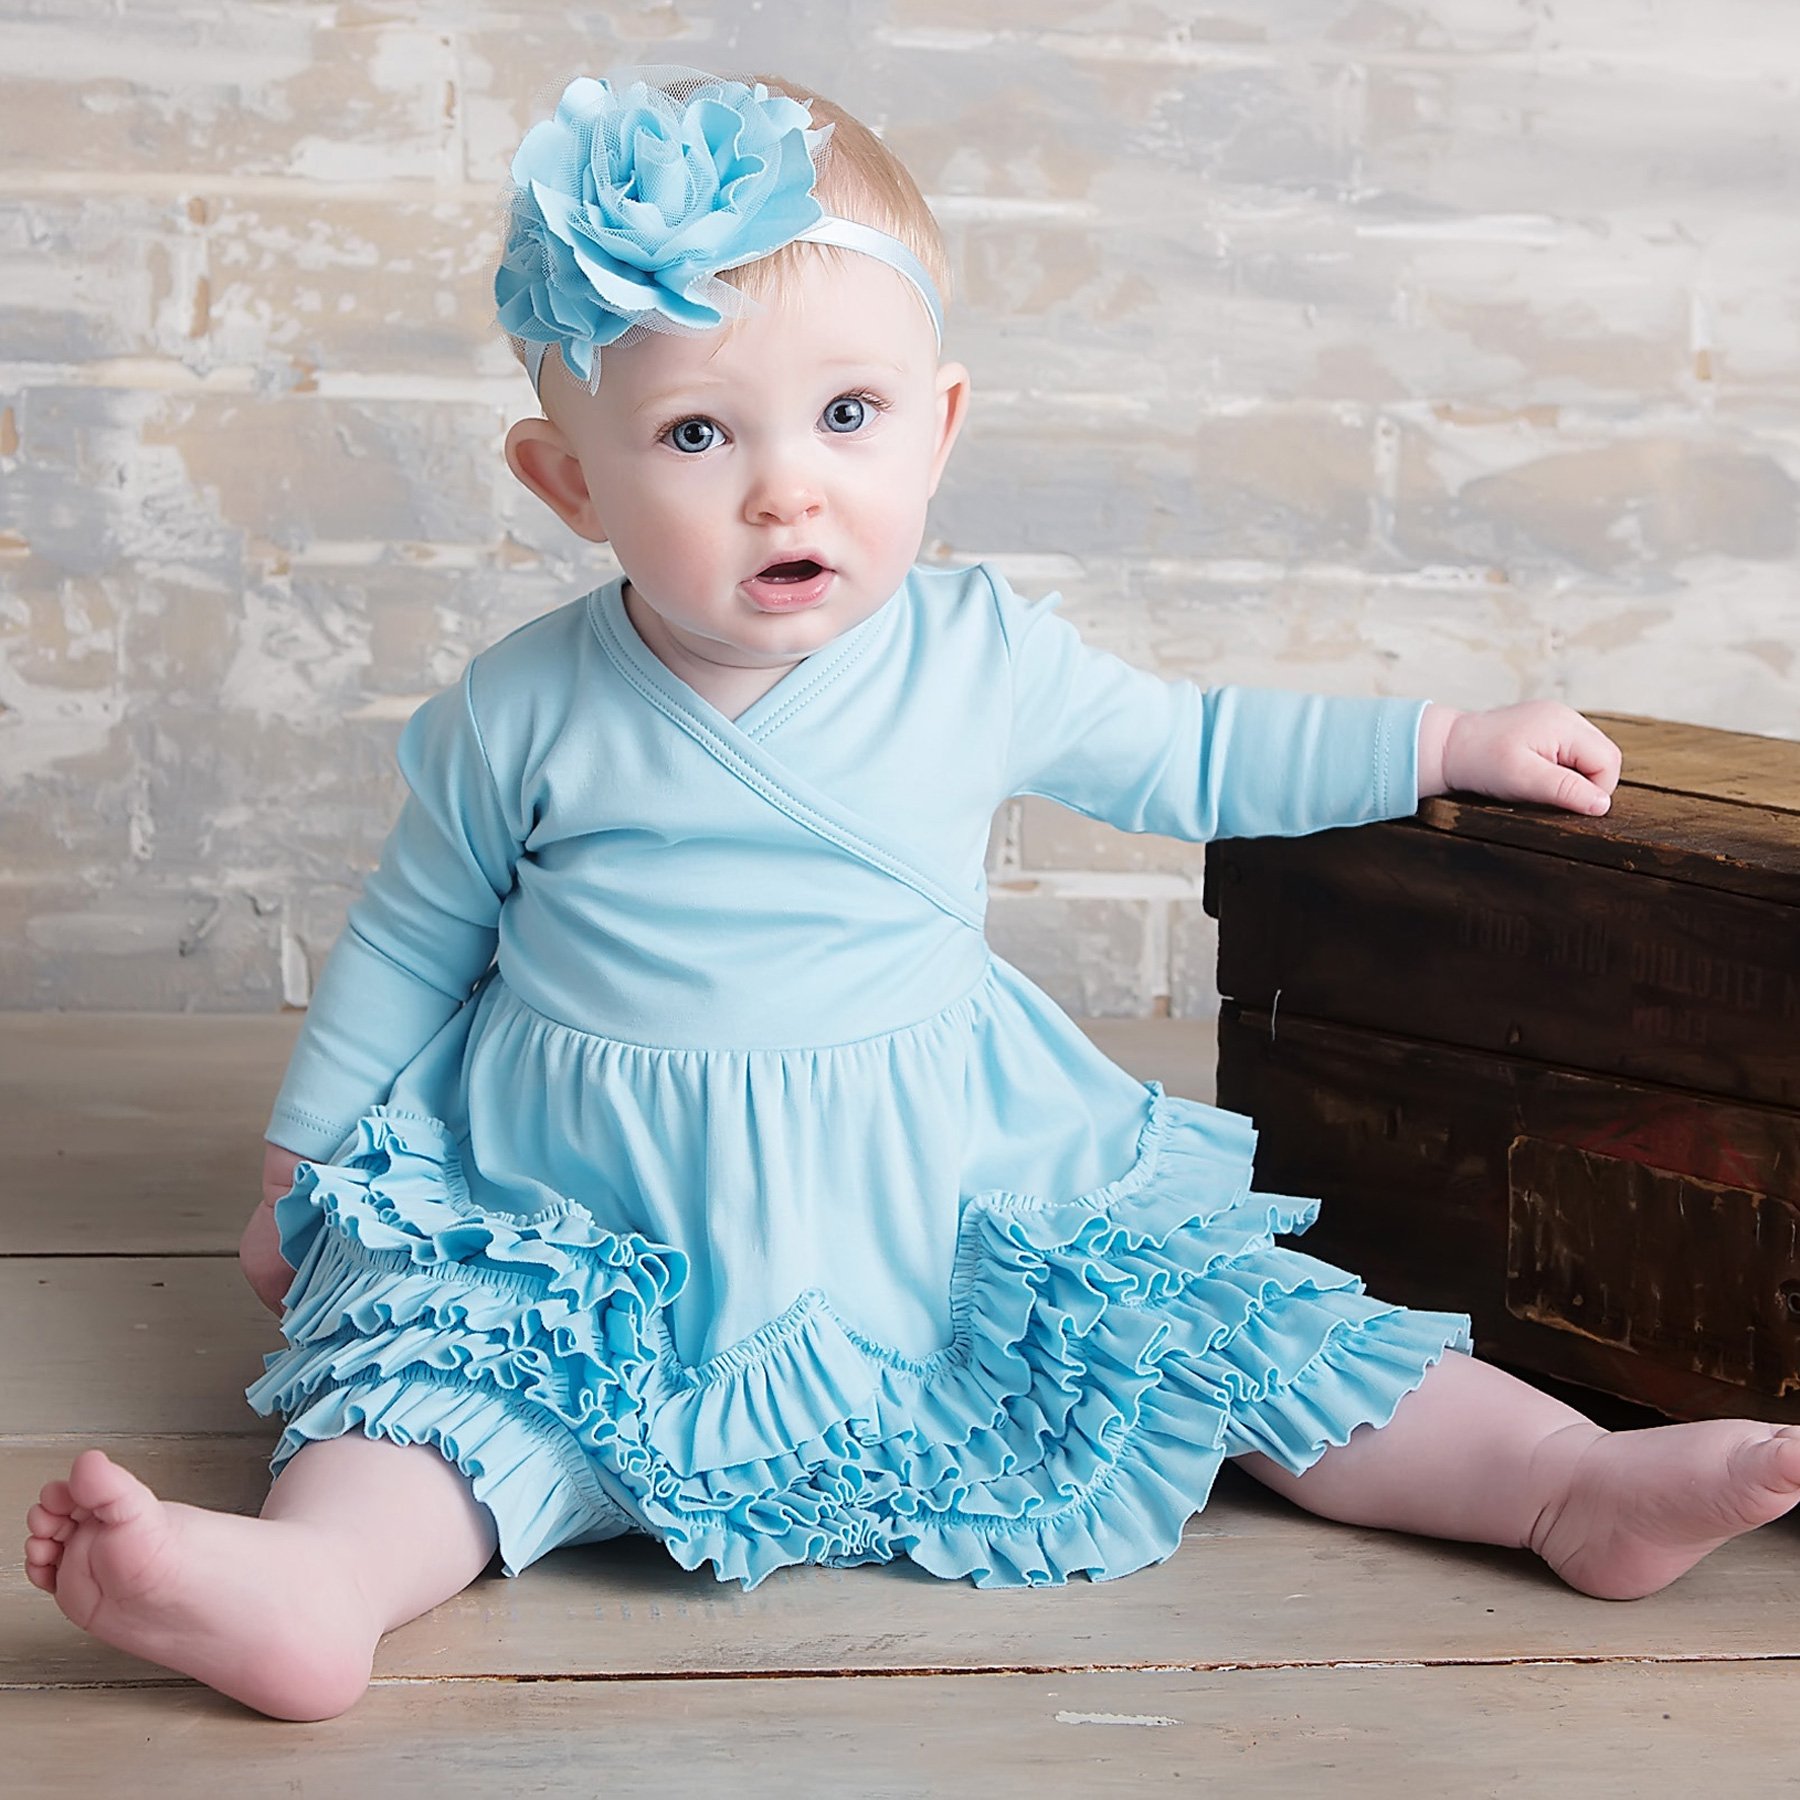 baby girl in blue dress